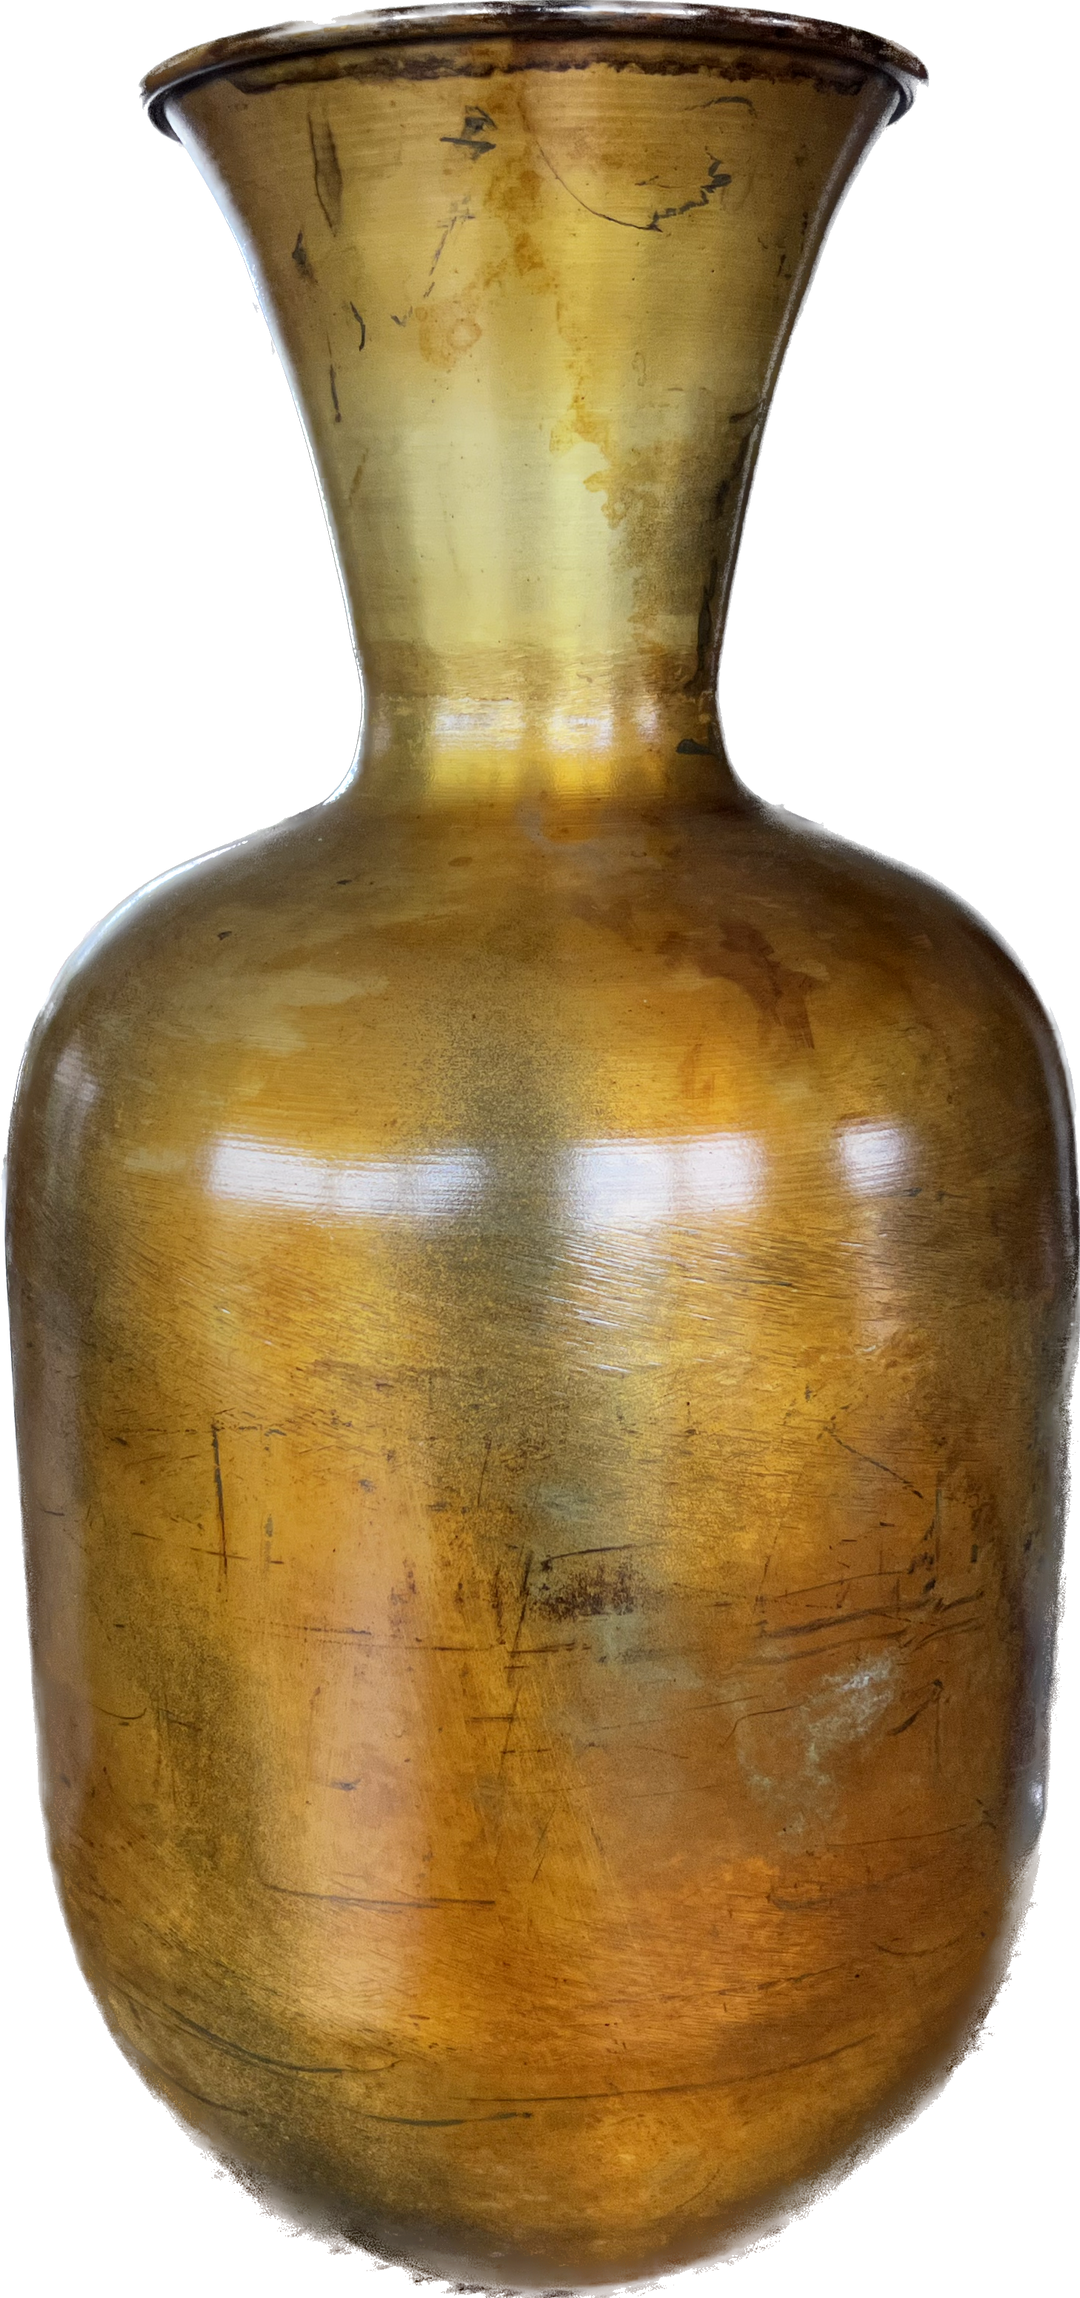 Vase Antique Brass - 37 cm high - Gold metal